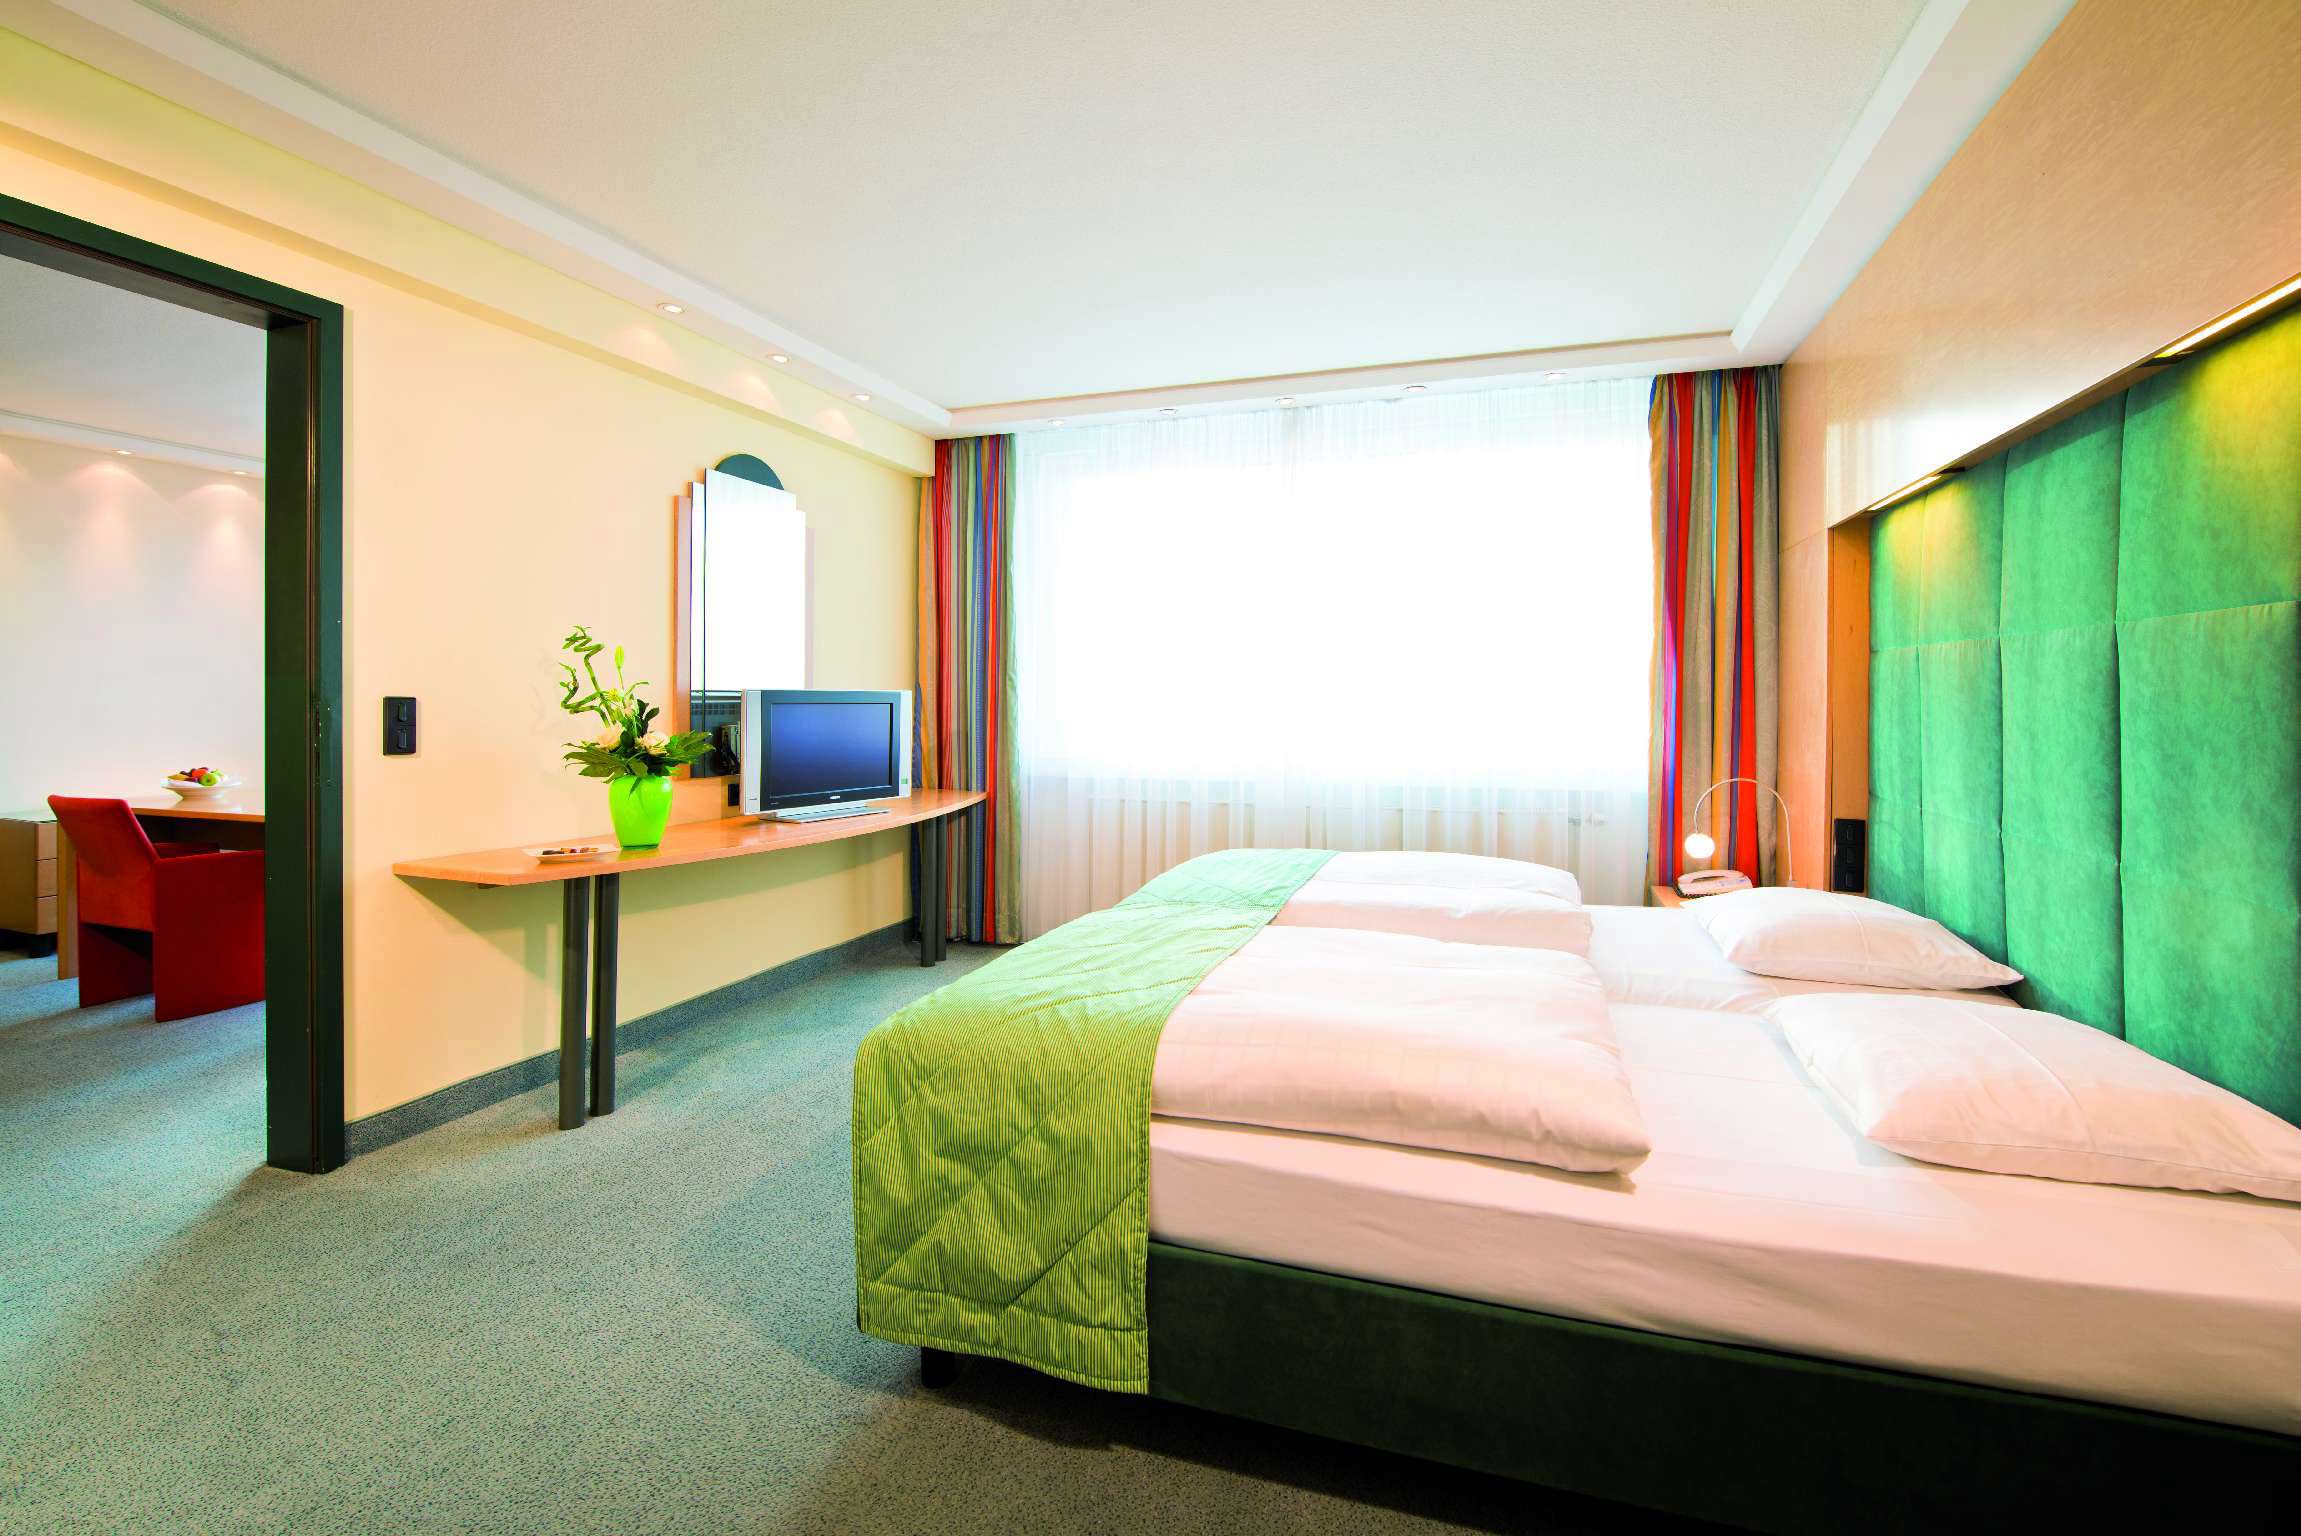 Suite im Maritim proArte Hotel, Berlin.
